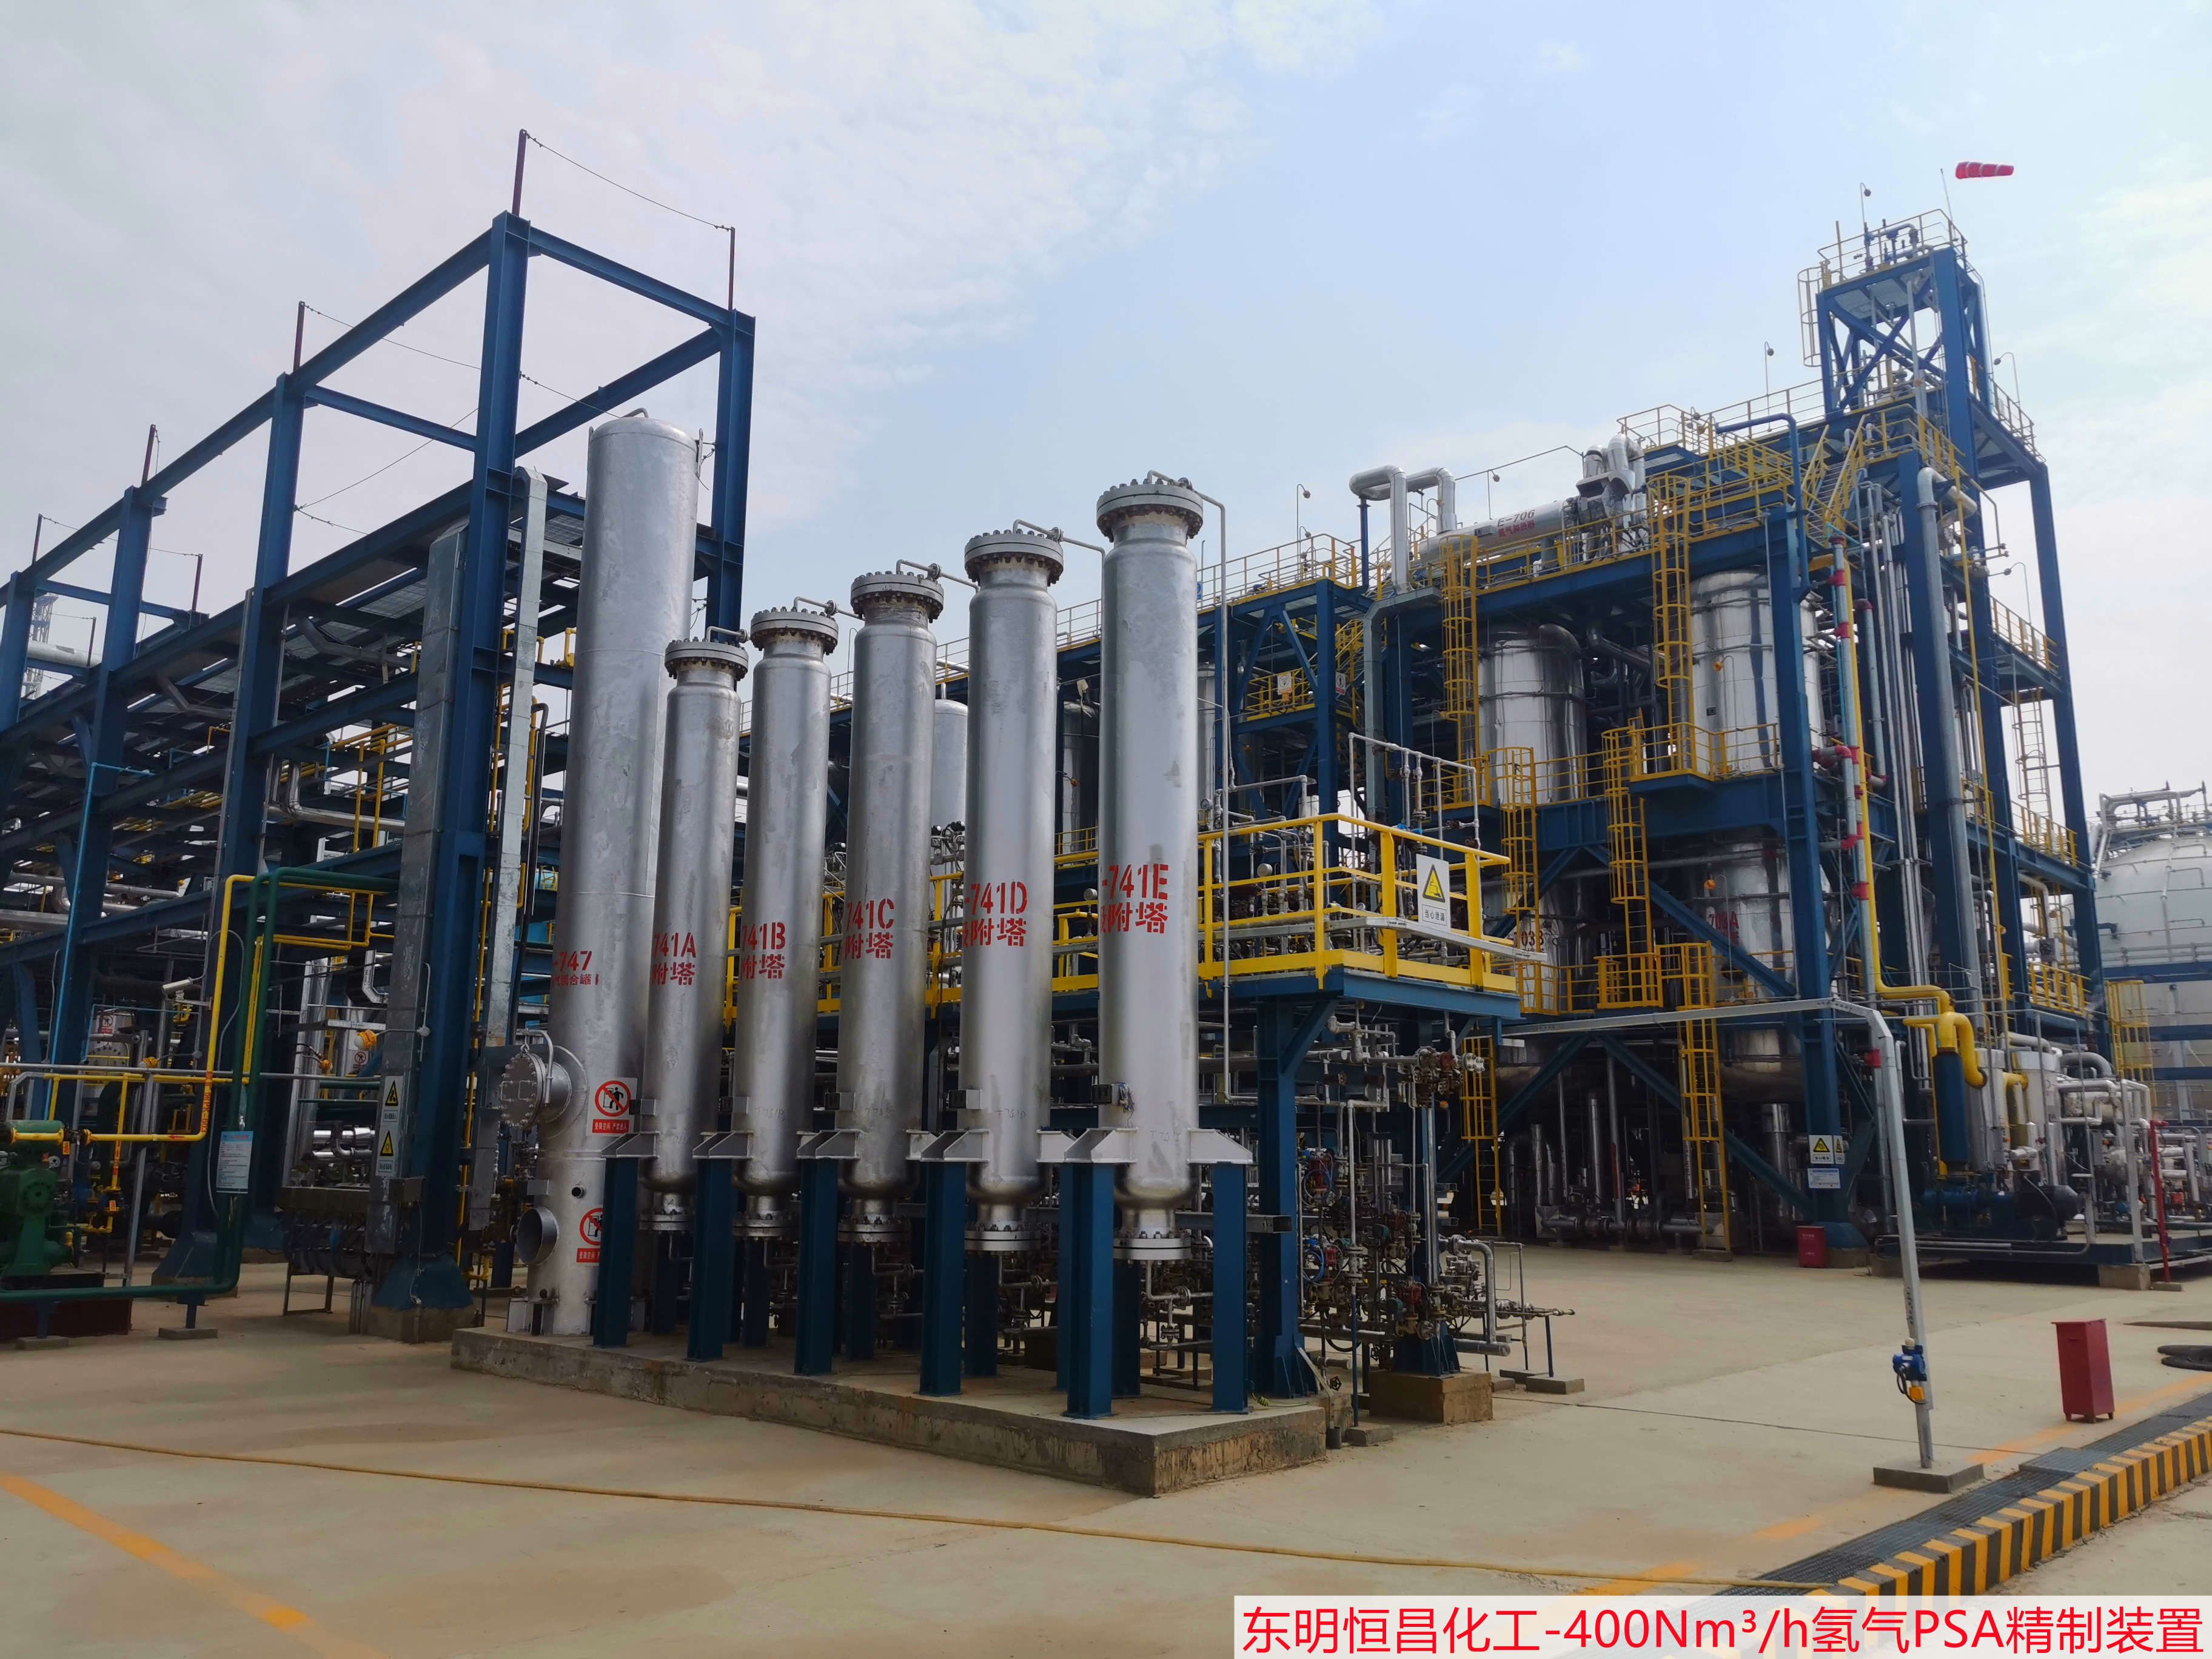 Dongming Hengchang Chemical Co., Ltd. 400 cubic meters of hydrogen PSA unit